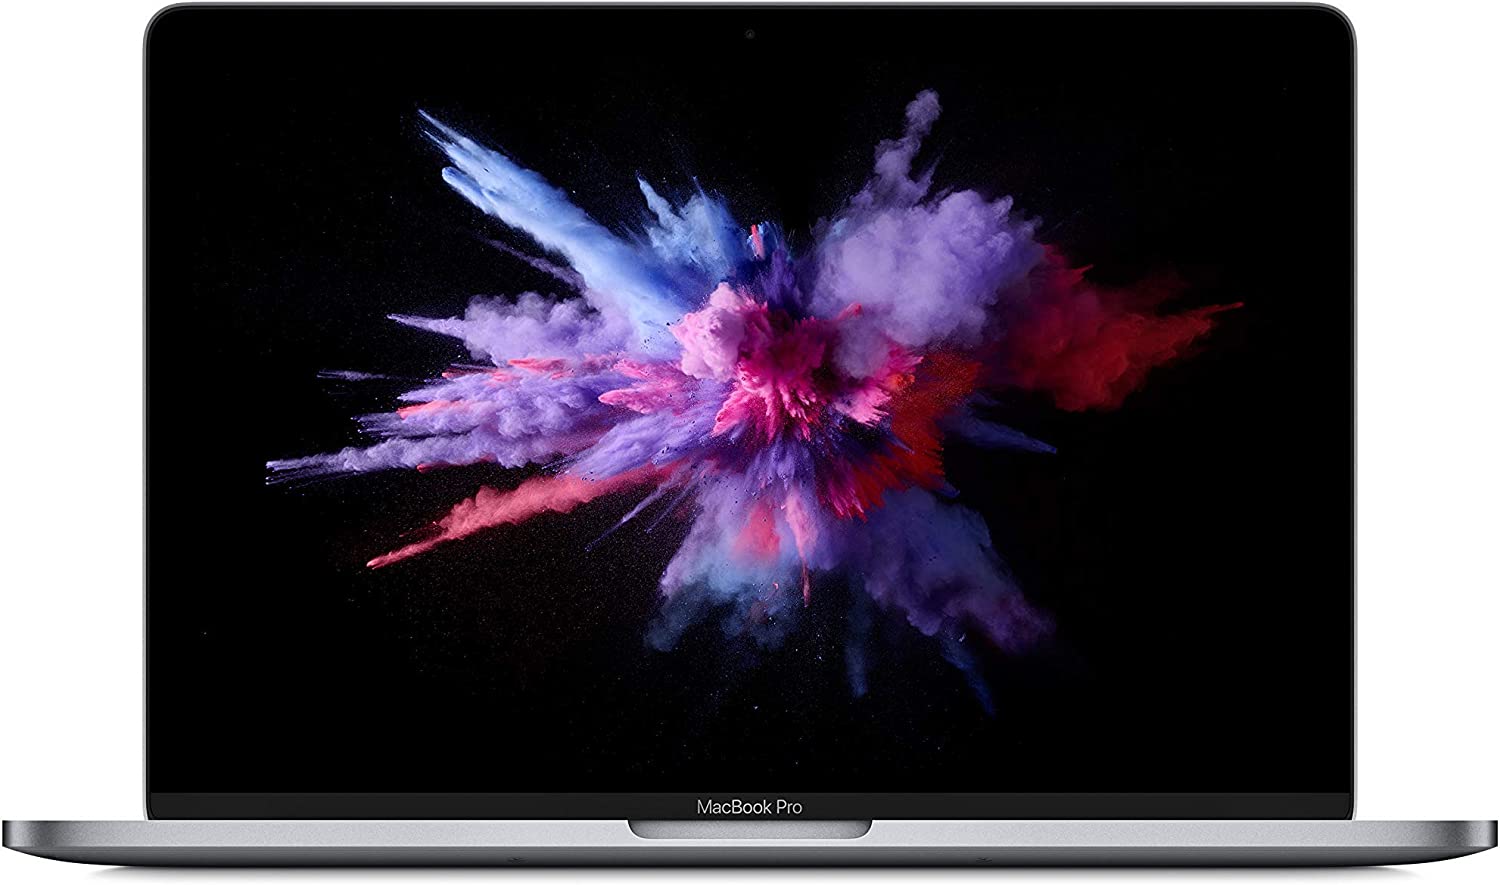 Apple Macbook Pro 15,4 A2159 2019 13 inch 1.4Ghz i5 core 8Gb Ram 128Gb SSD Eng/Arabic keyboard Space Grey (Renewed)